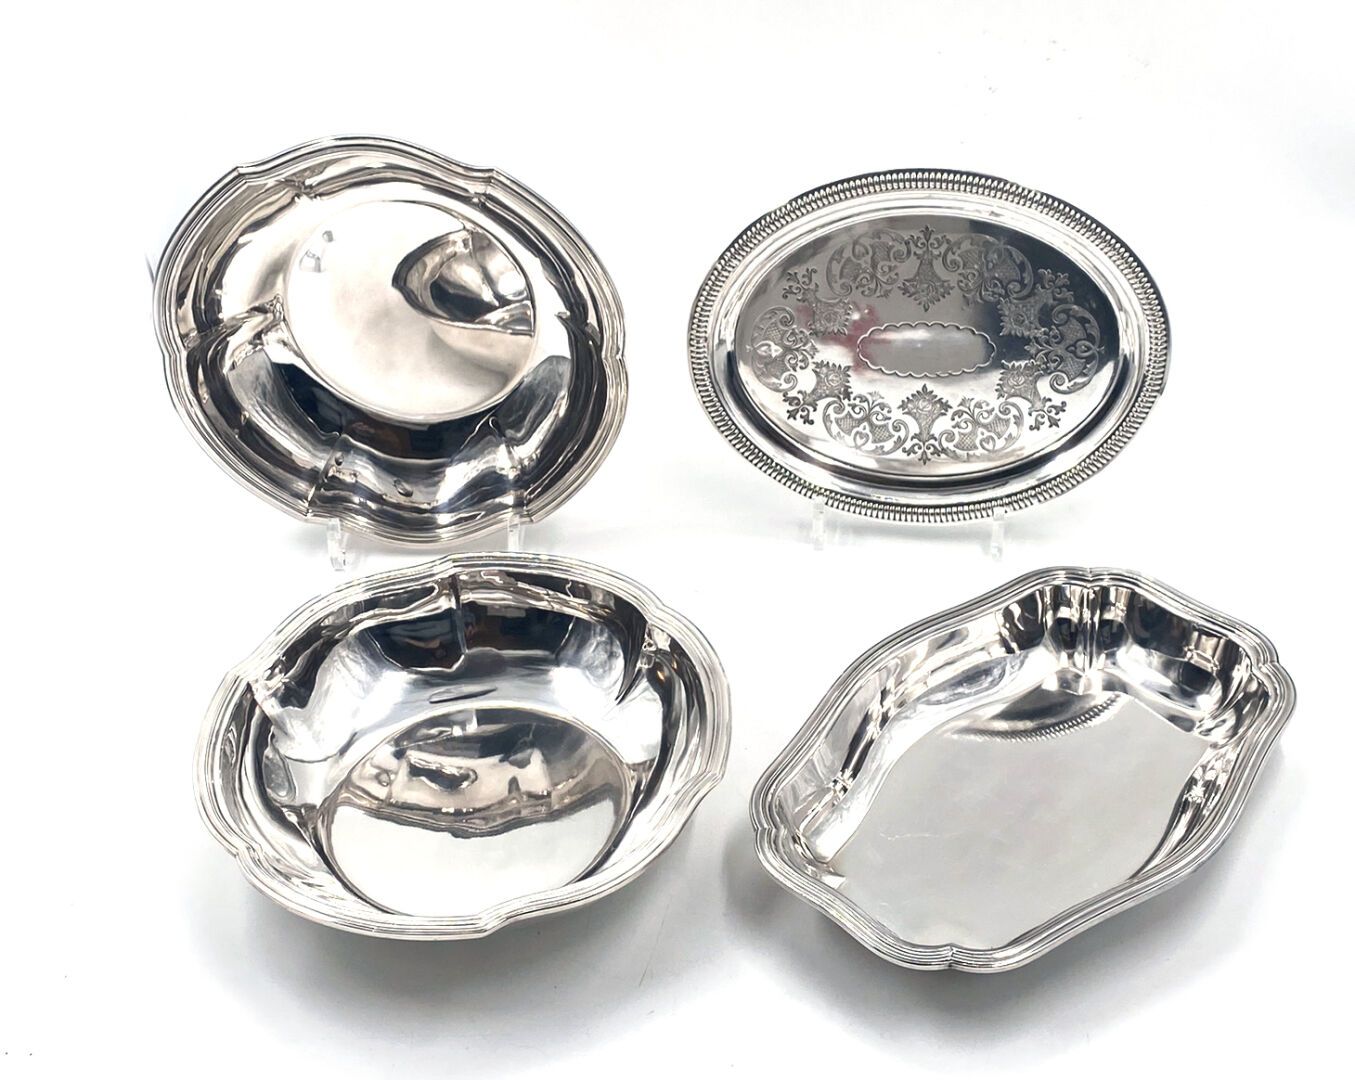 Null 博因-塔布瑞特
一套两个圆形和空心碗和一个长方形碗，镀银金属，锉刀和轮廓模型。
签名为 "BOIN-TABURET à Paris"。
附有一个刻有C&hellip;